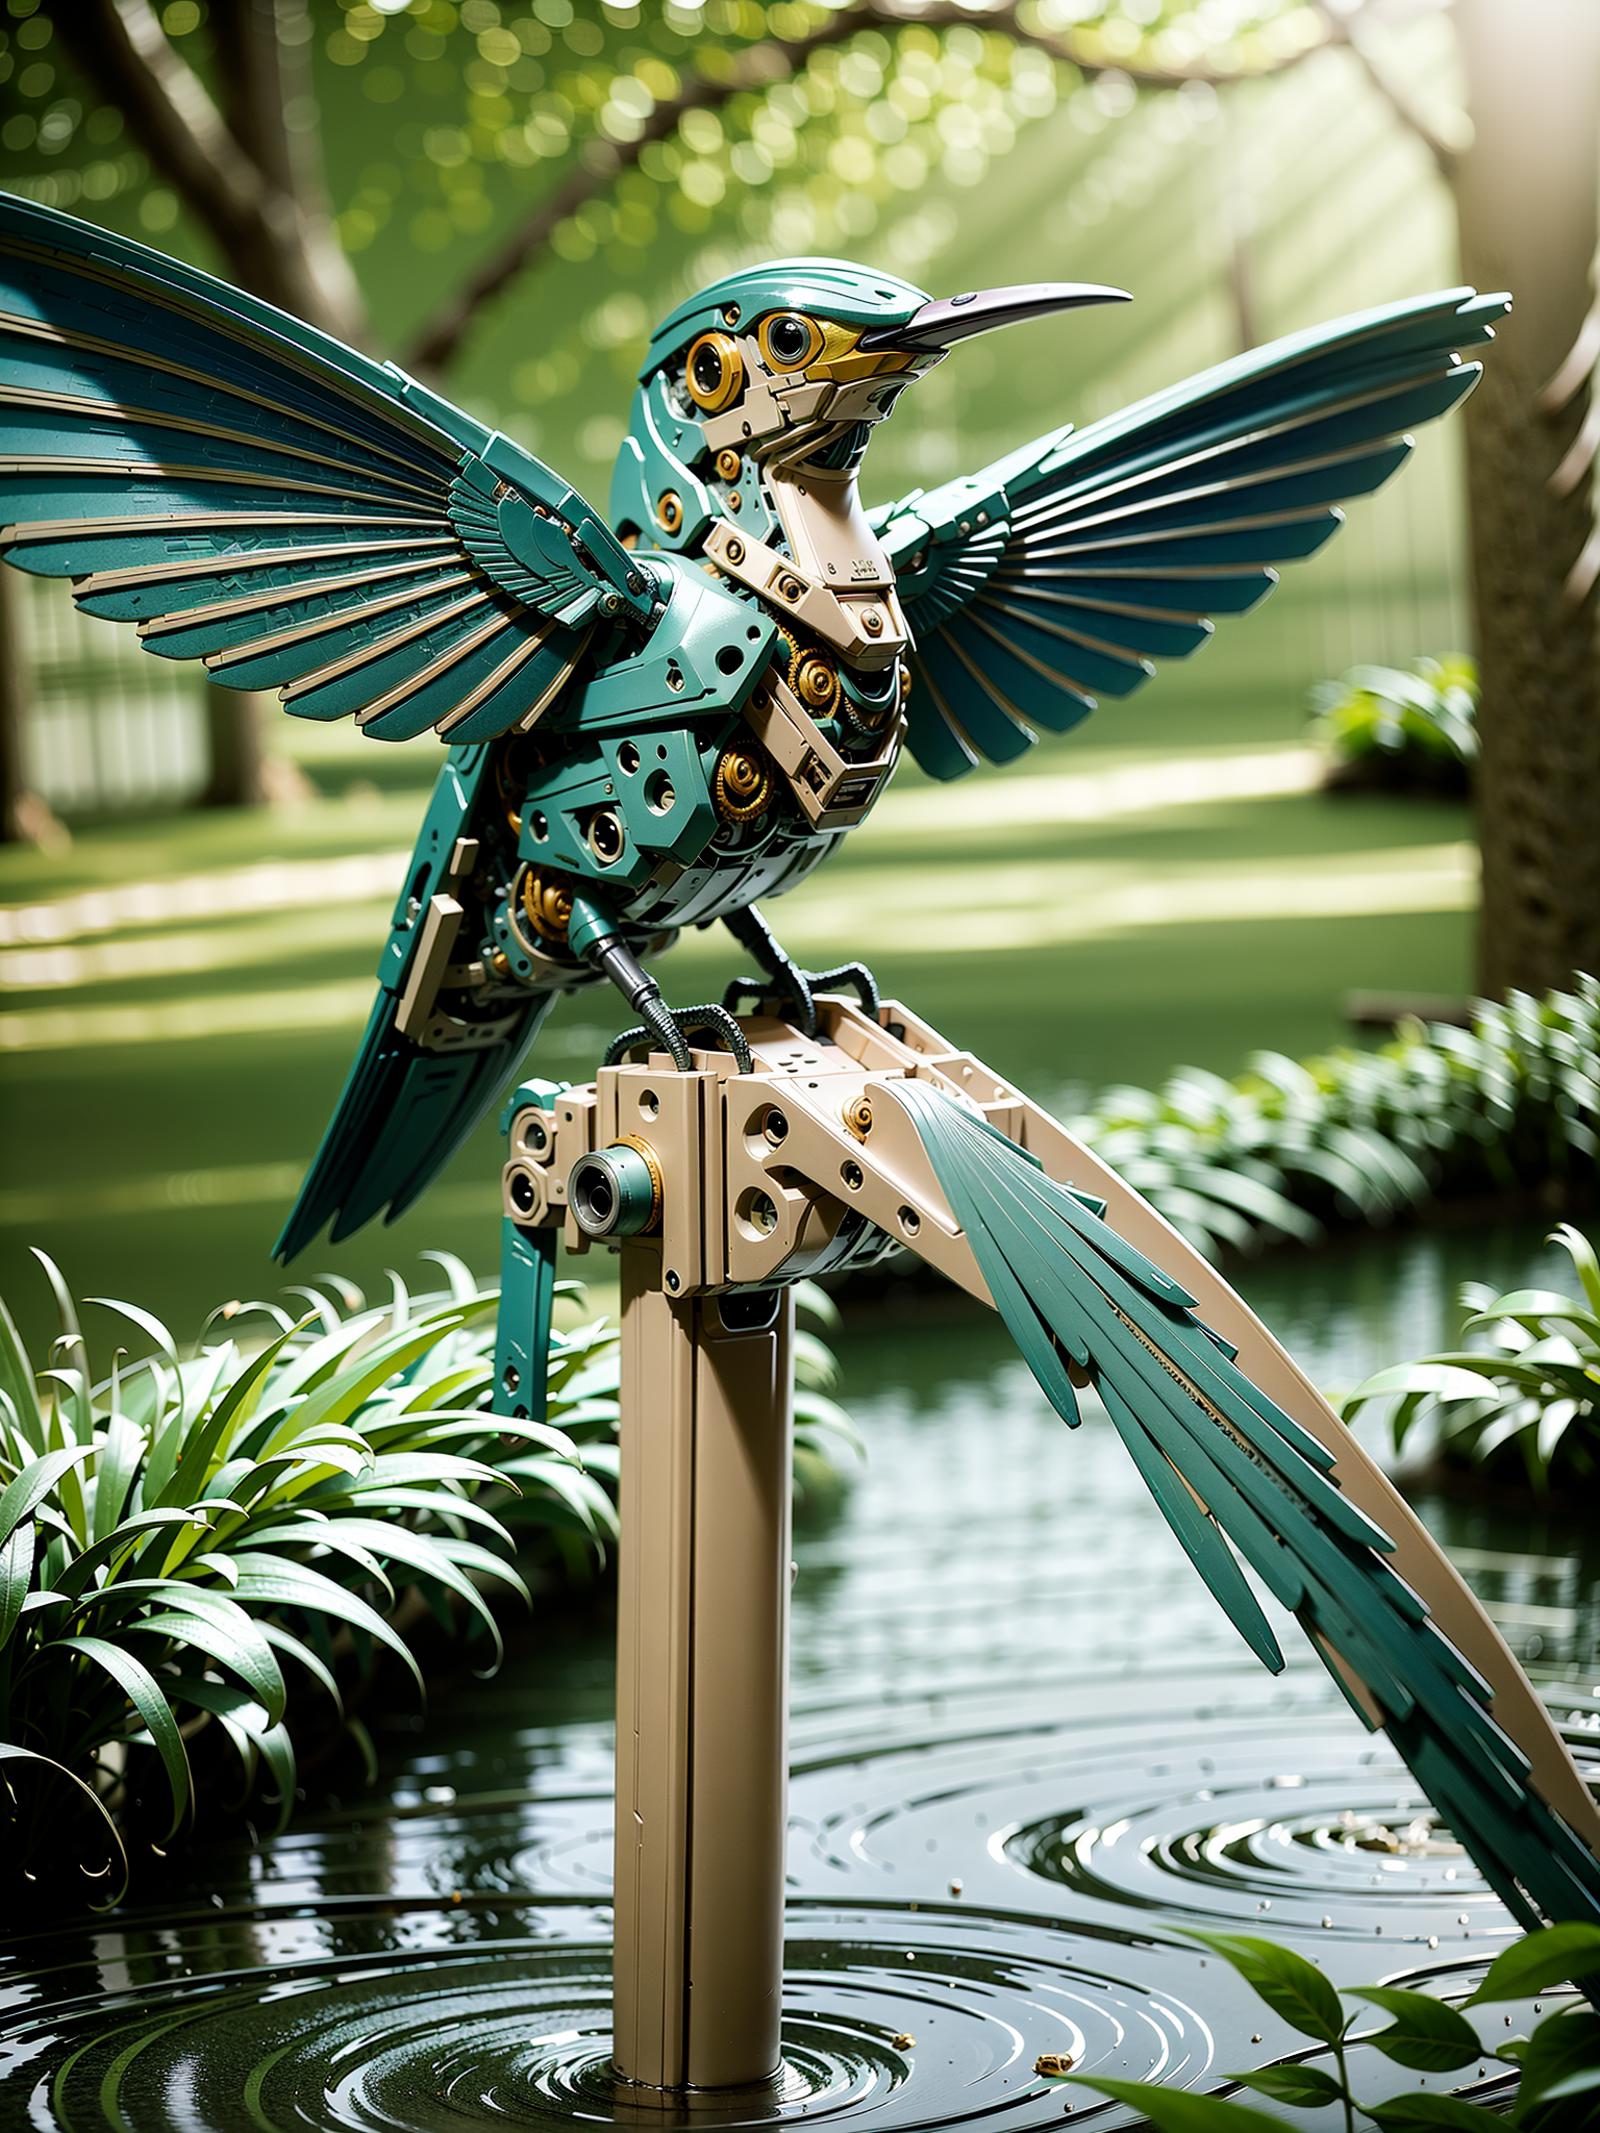 mechanical bird image by InfiniteLight